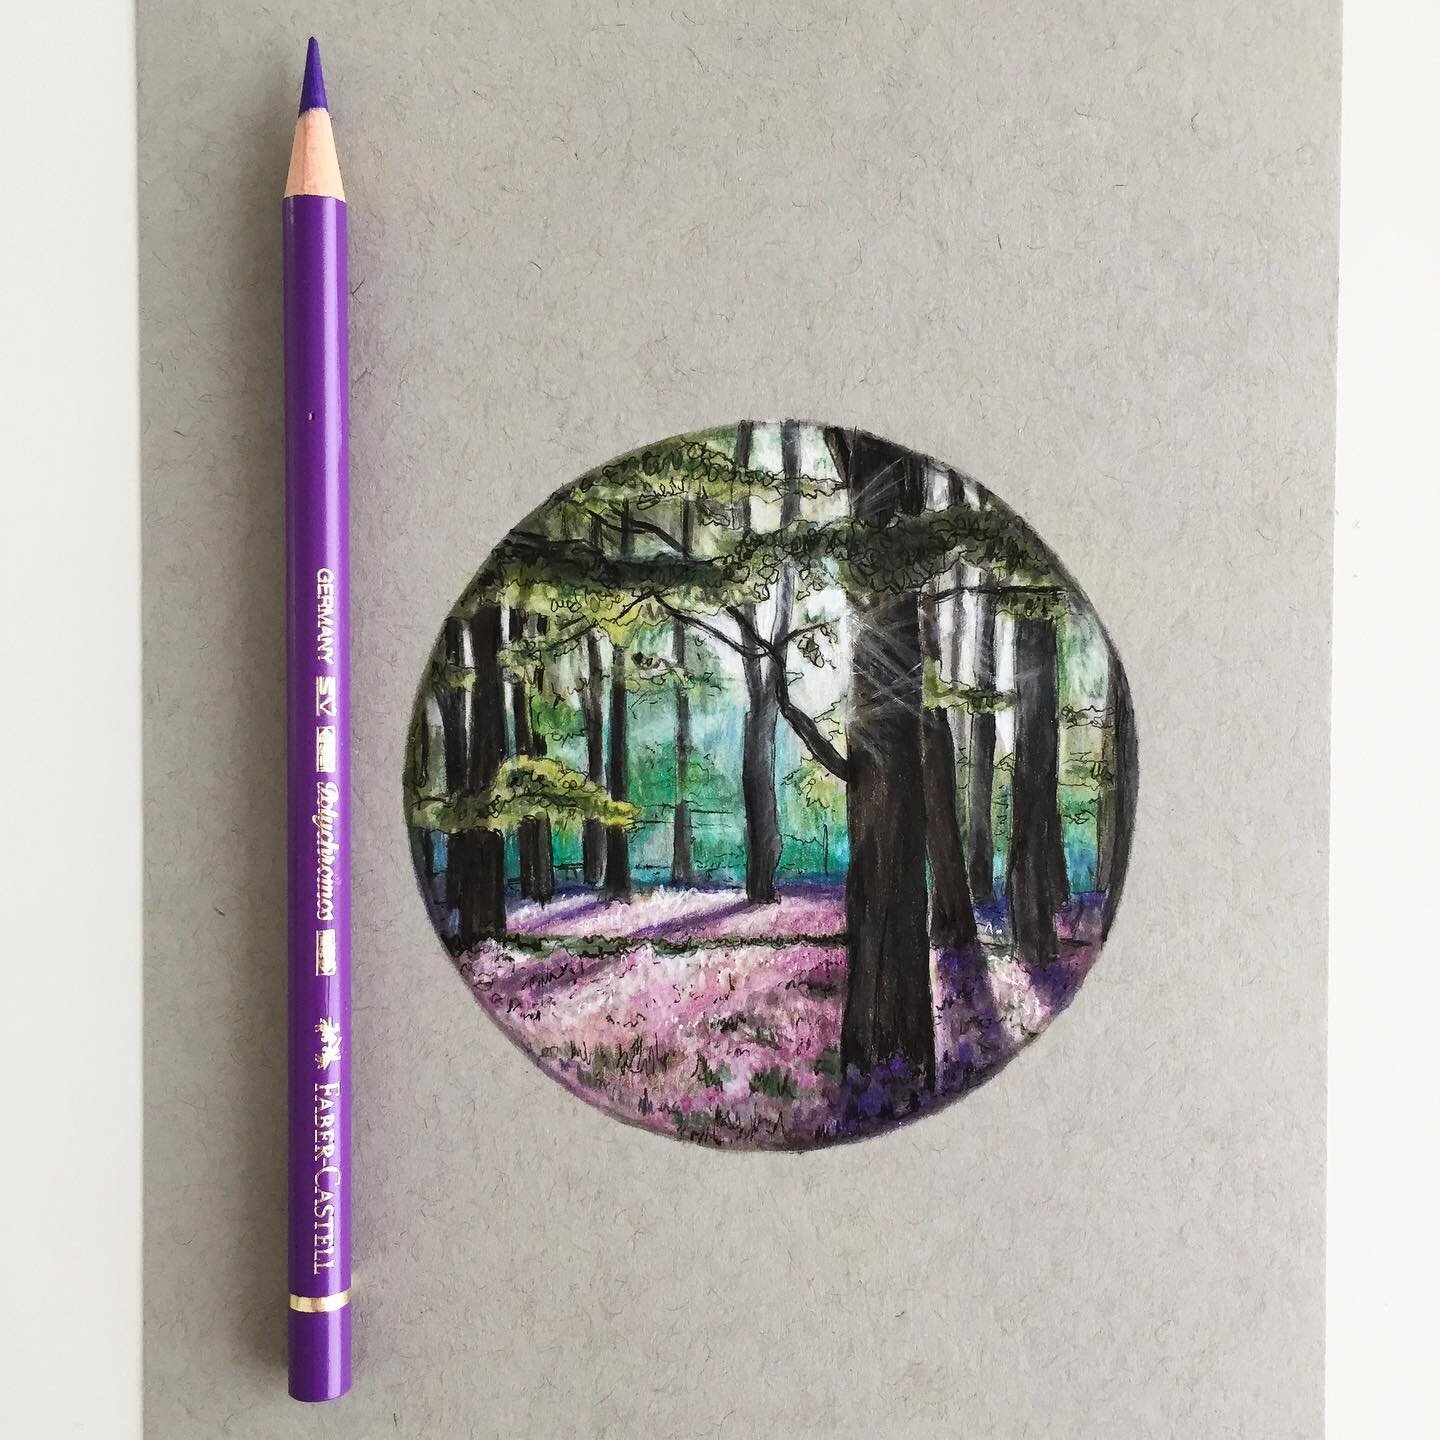 🌷
.
.
#art #drawing #pen #pencil #sketch #illustration #bluebells #woodland #spring #fabercastell #strathmore